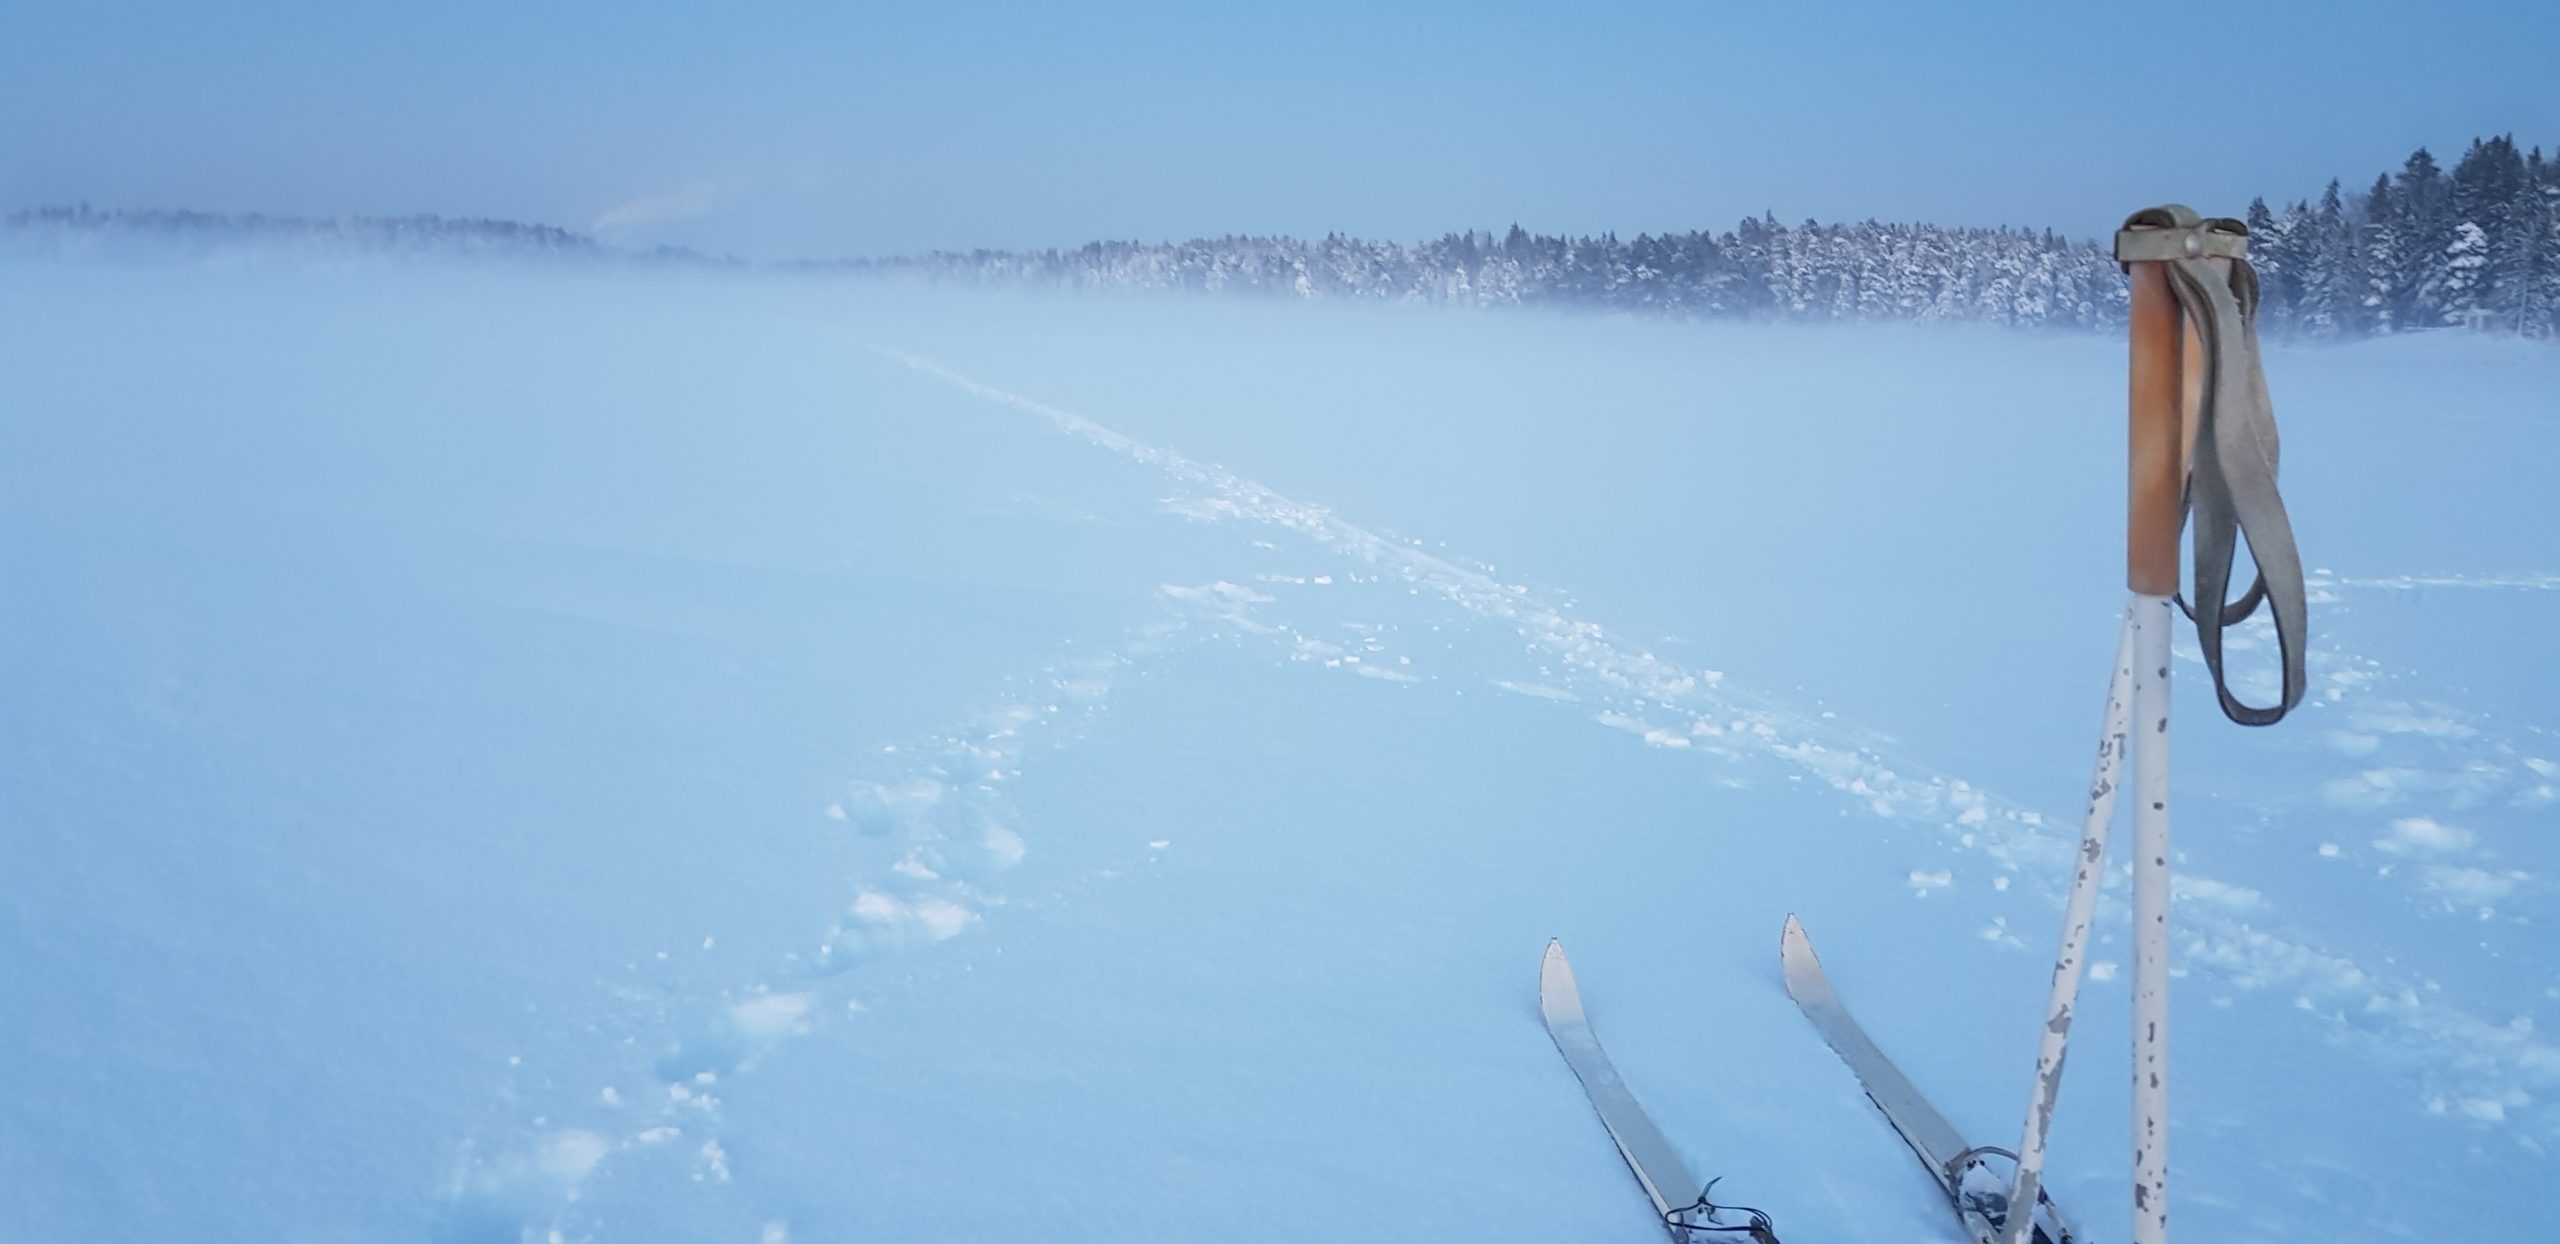 Skiing on sea ice